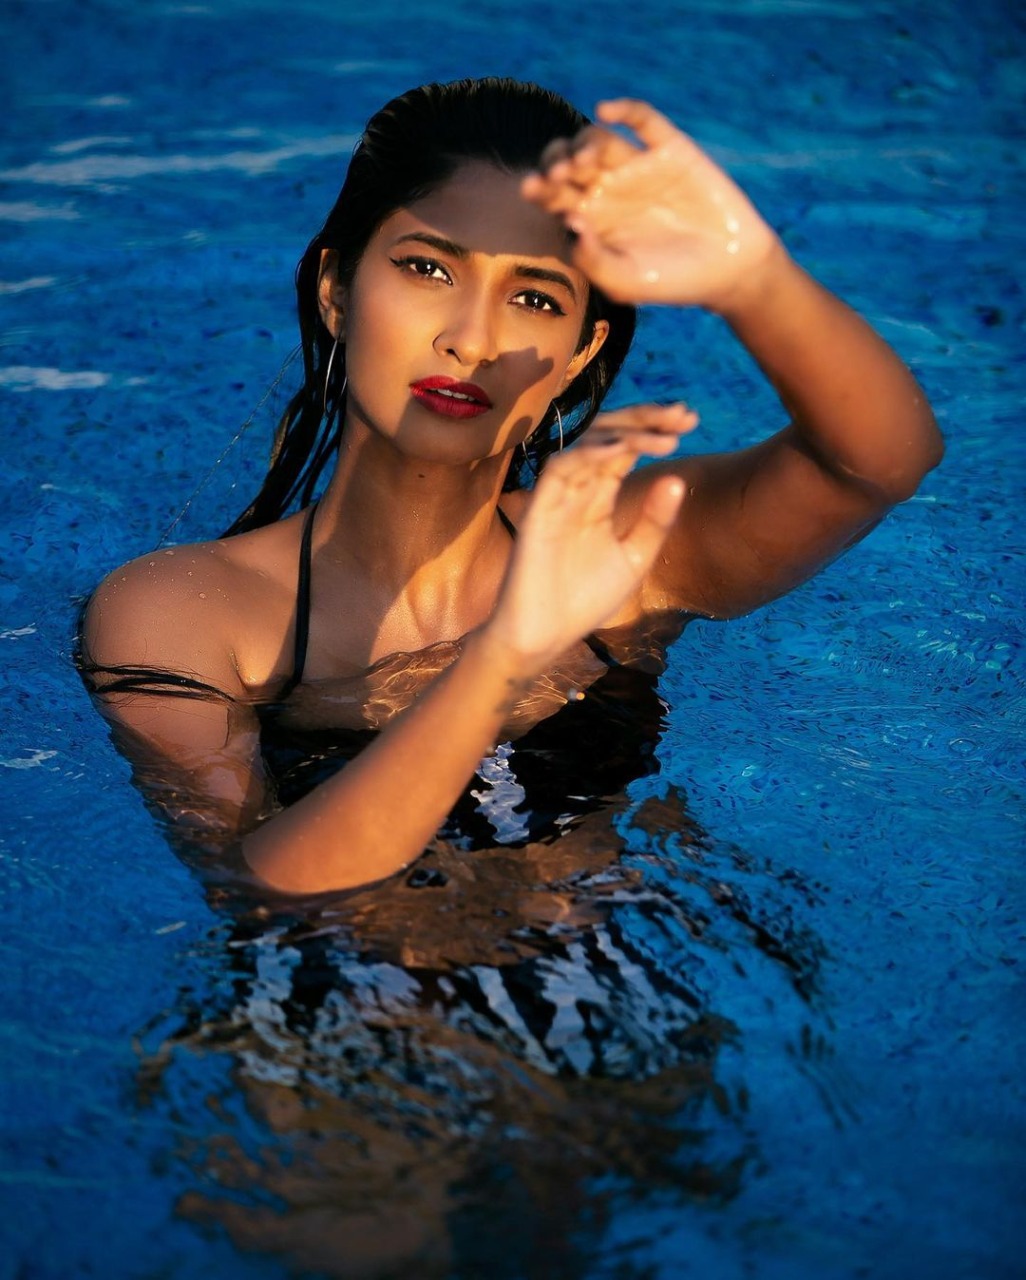 keerthy pandian latest bikini photo shoot goes viral on social media